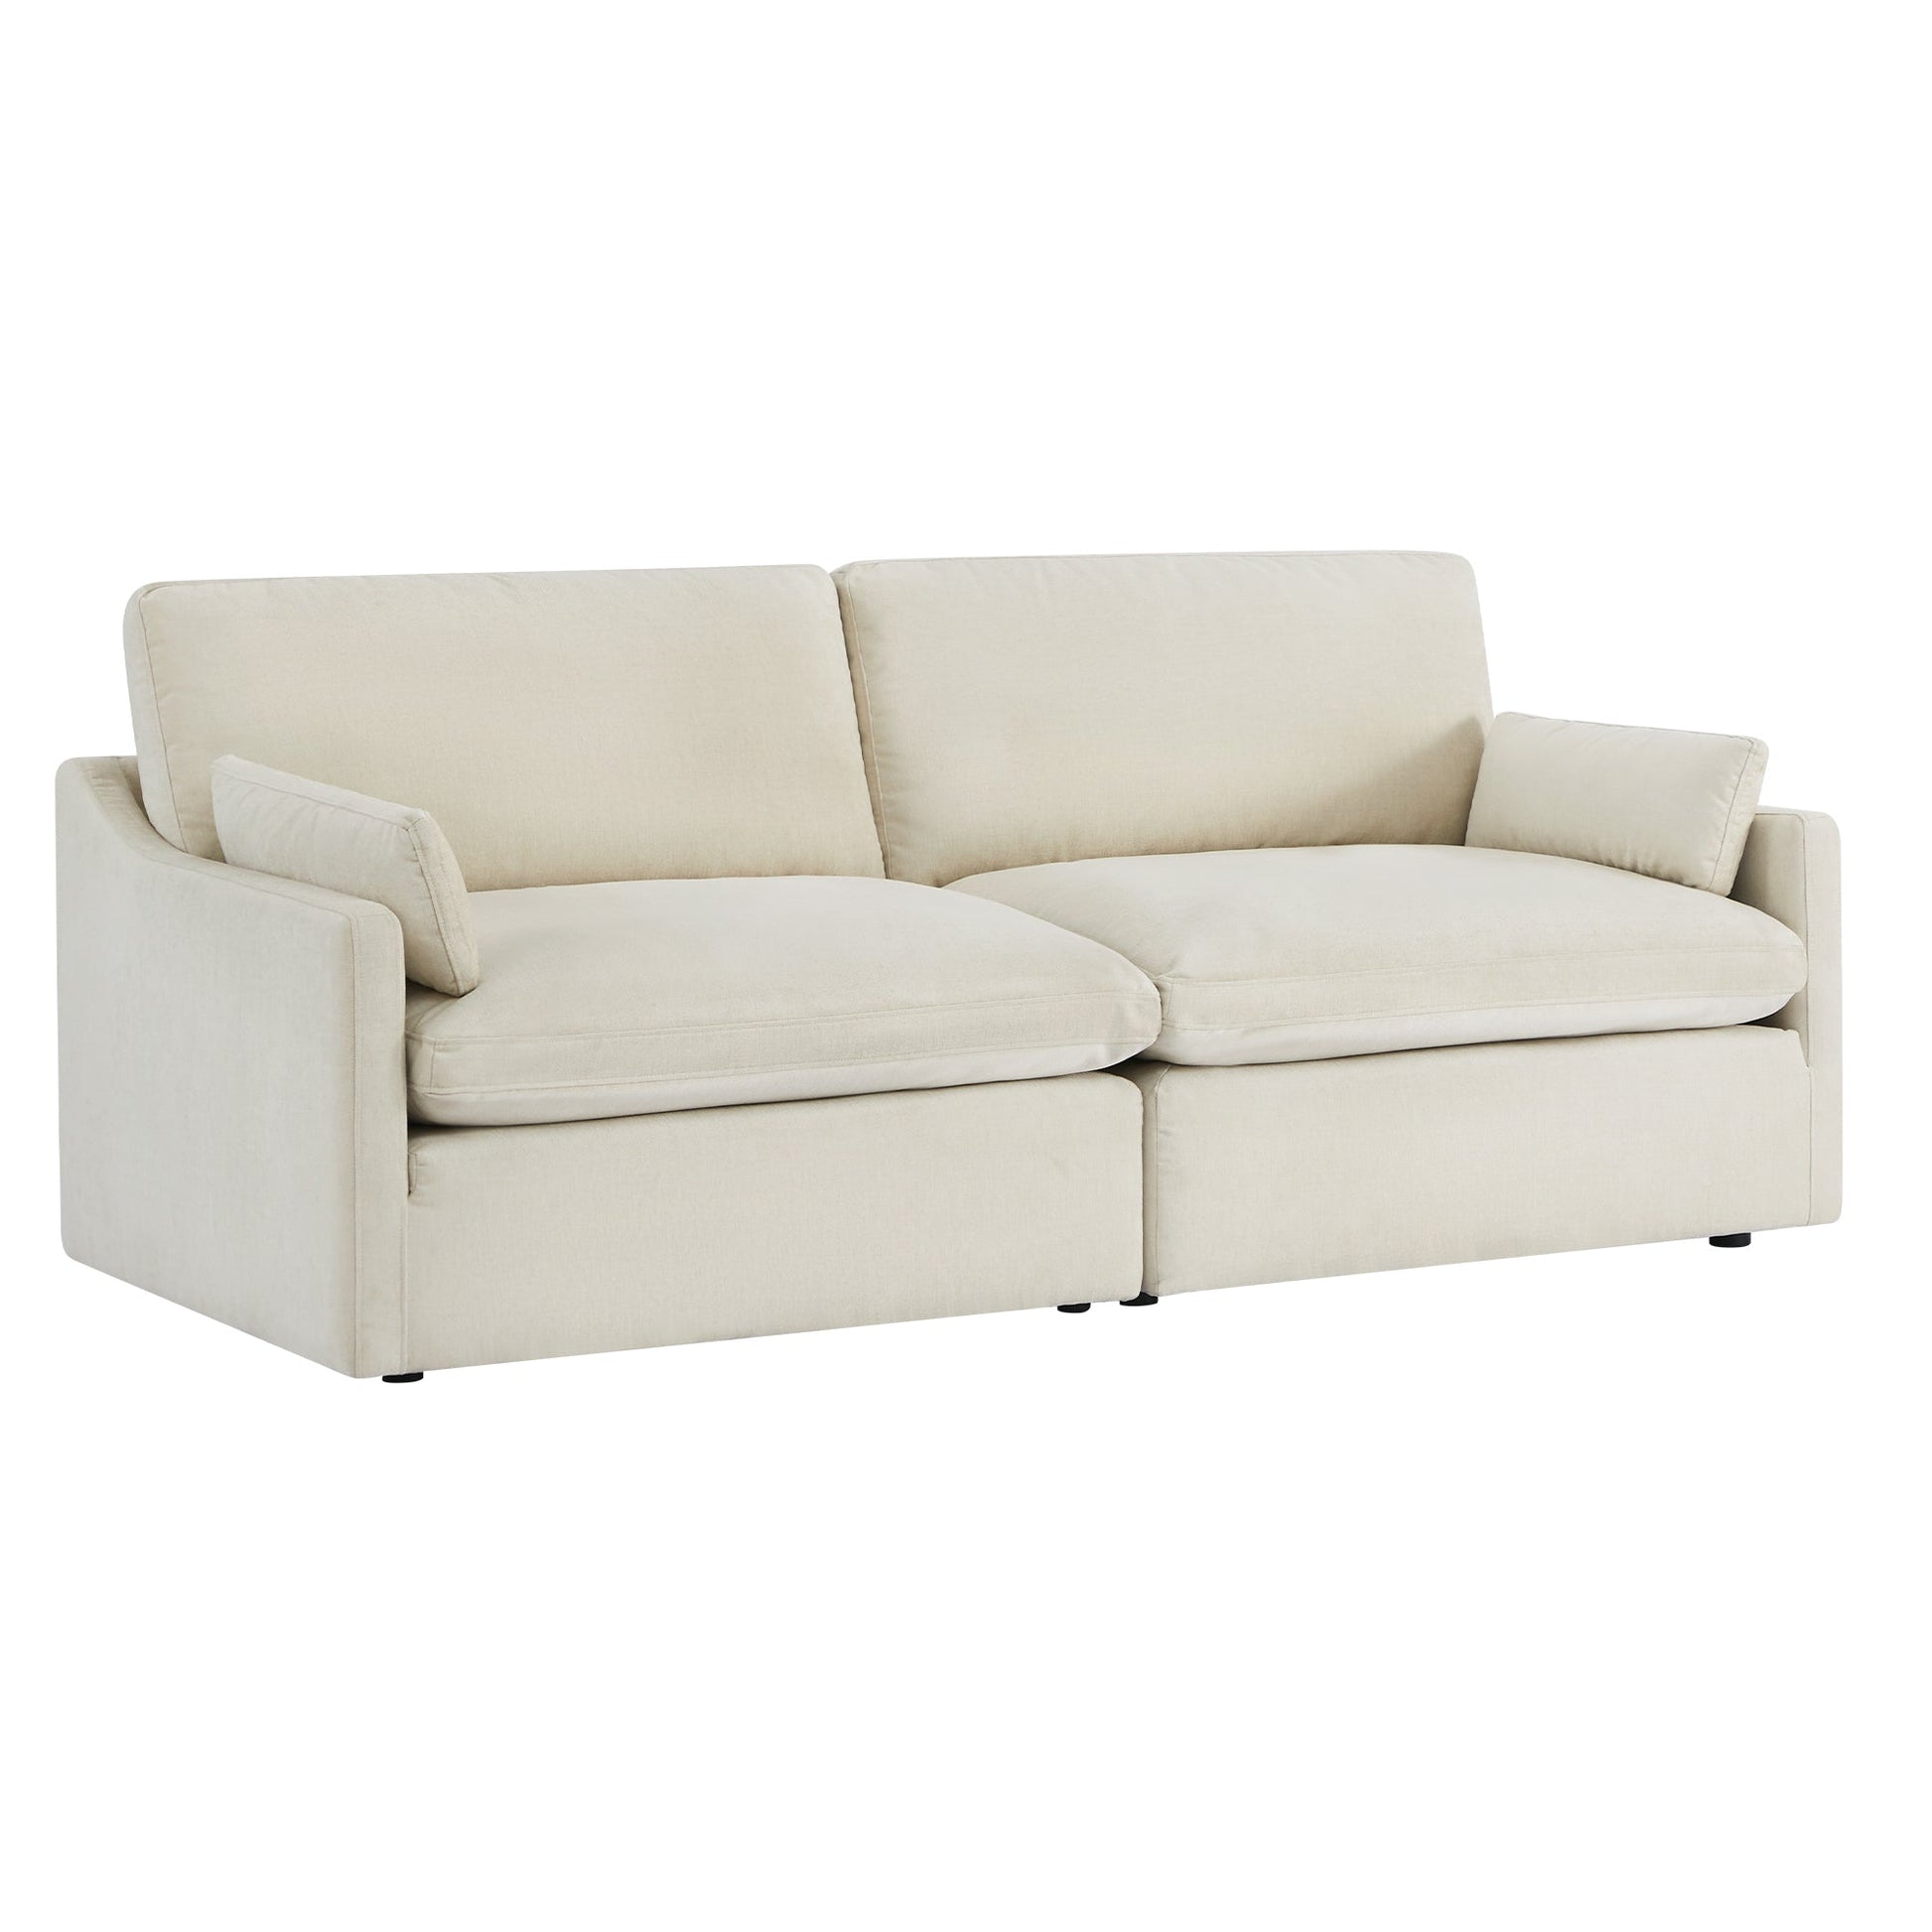 CHITA LIVING-Kenna 2-Piece Modular Sofa (90")-Sofas-Fabric-Cream-